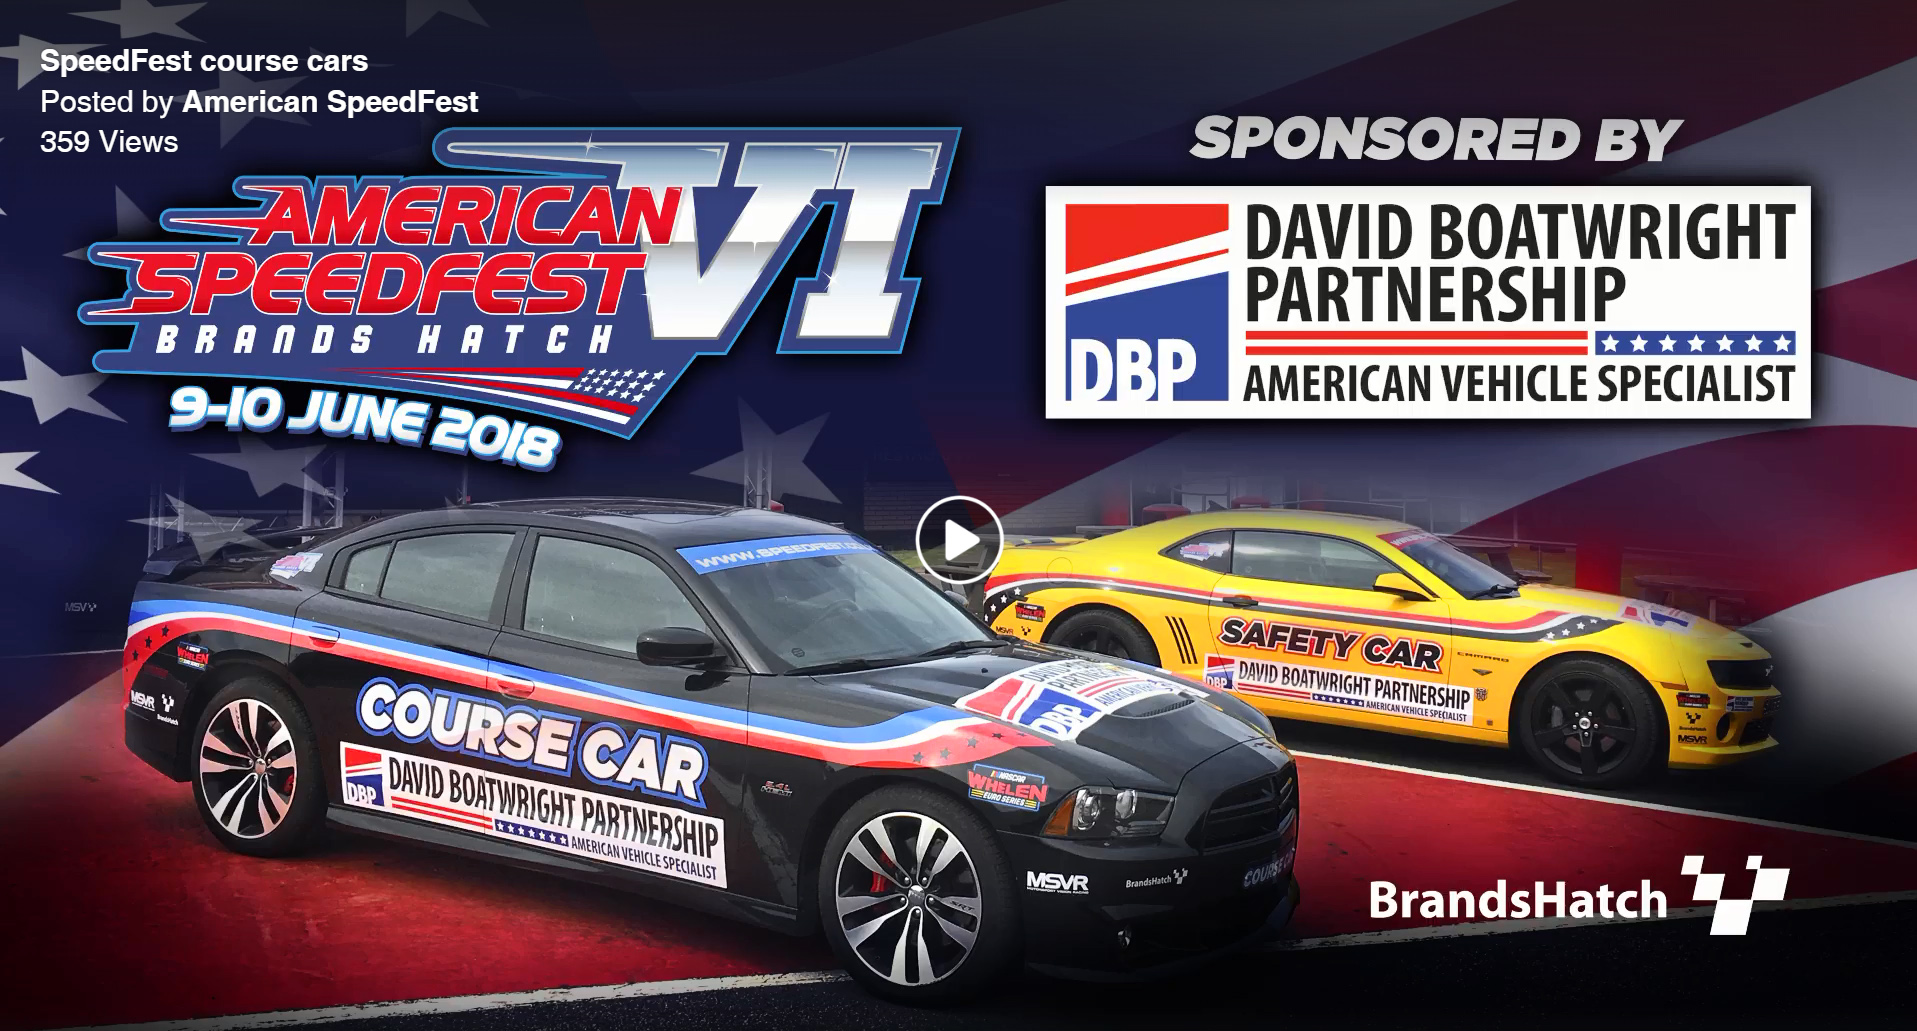 American Speedfest David Boatwright Partnership